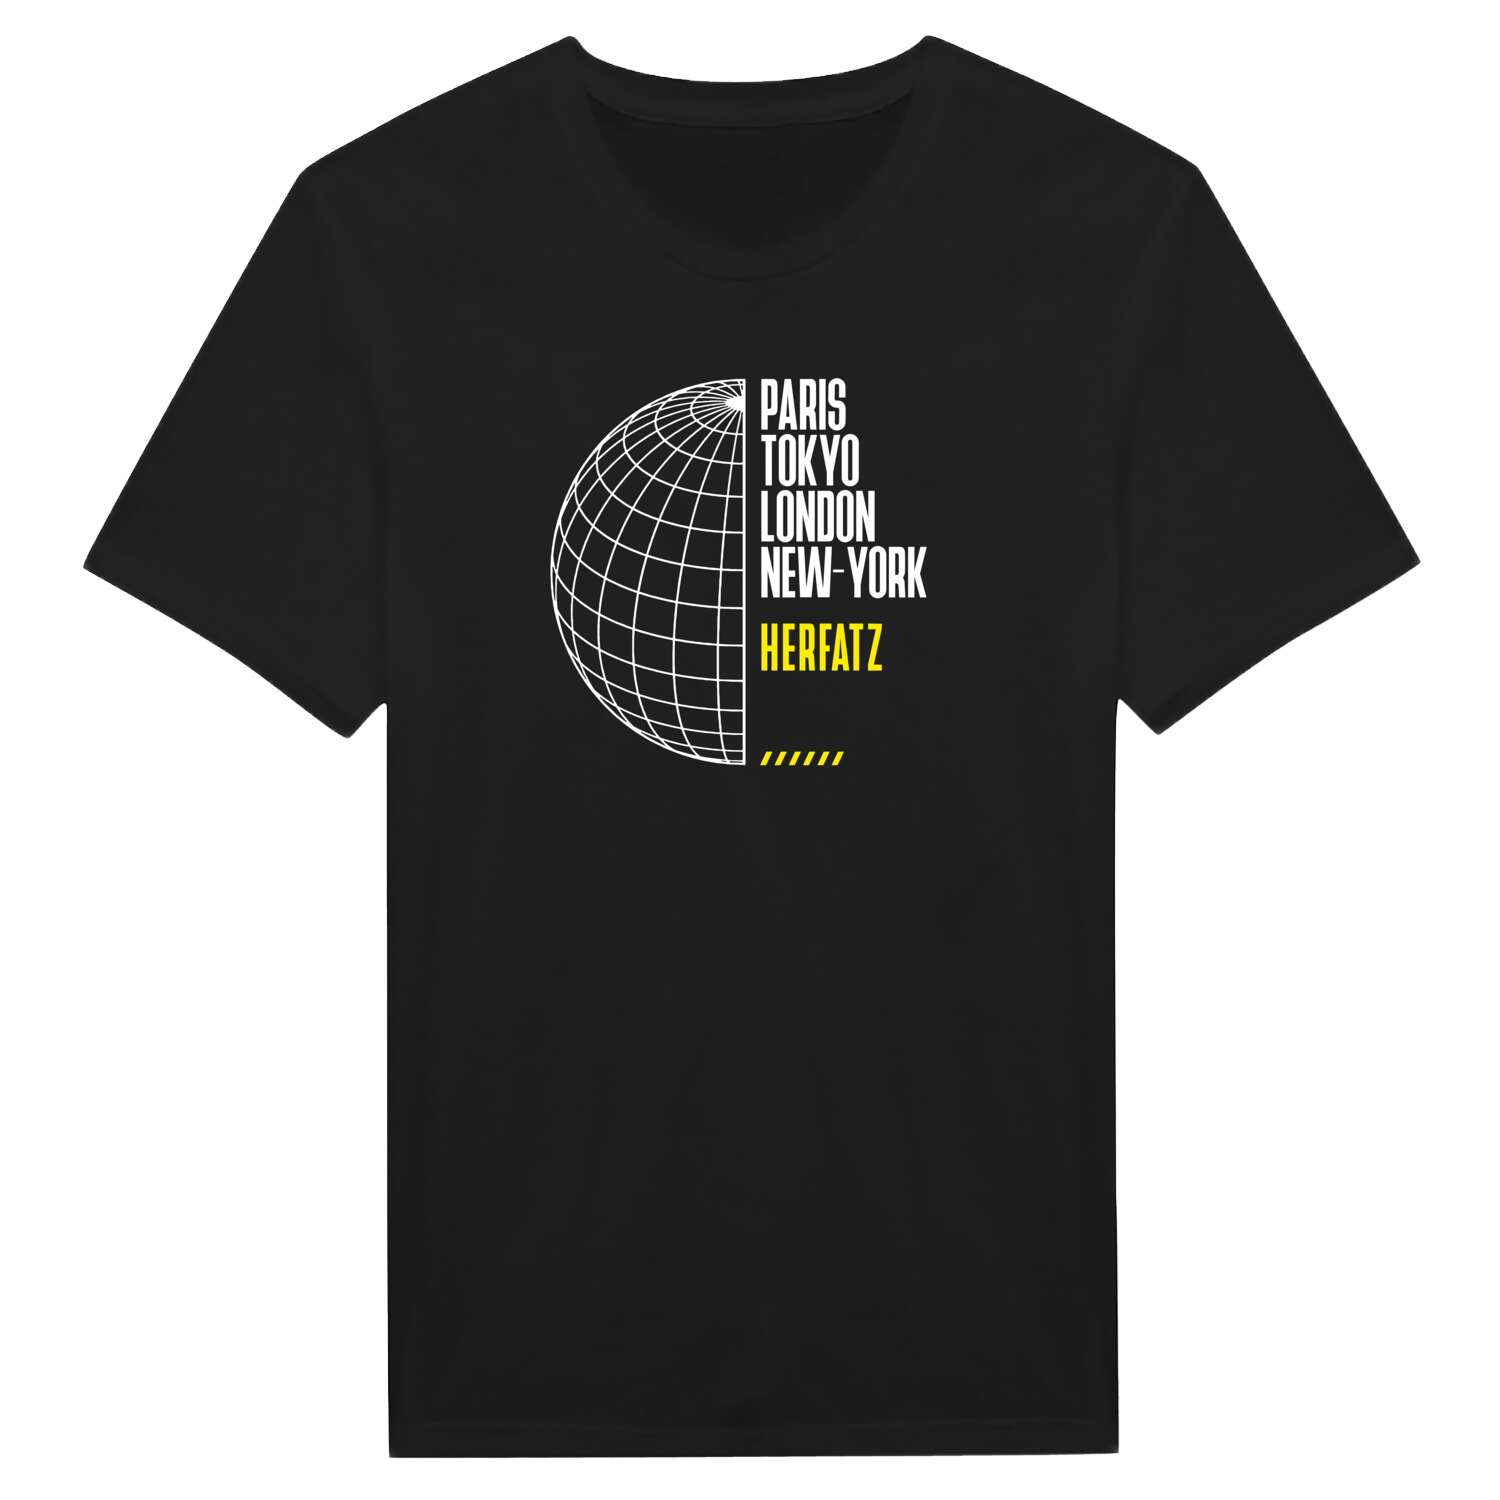 Herfatz T-Shirt »Paris Tokyo London«